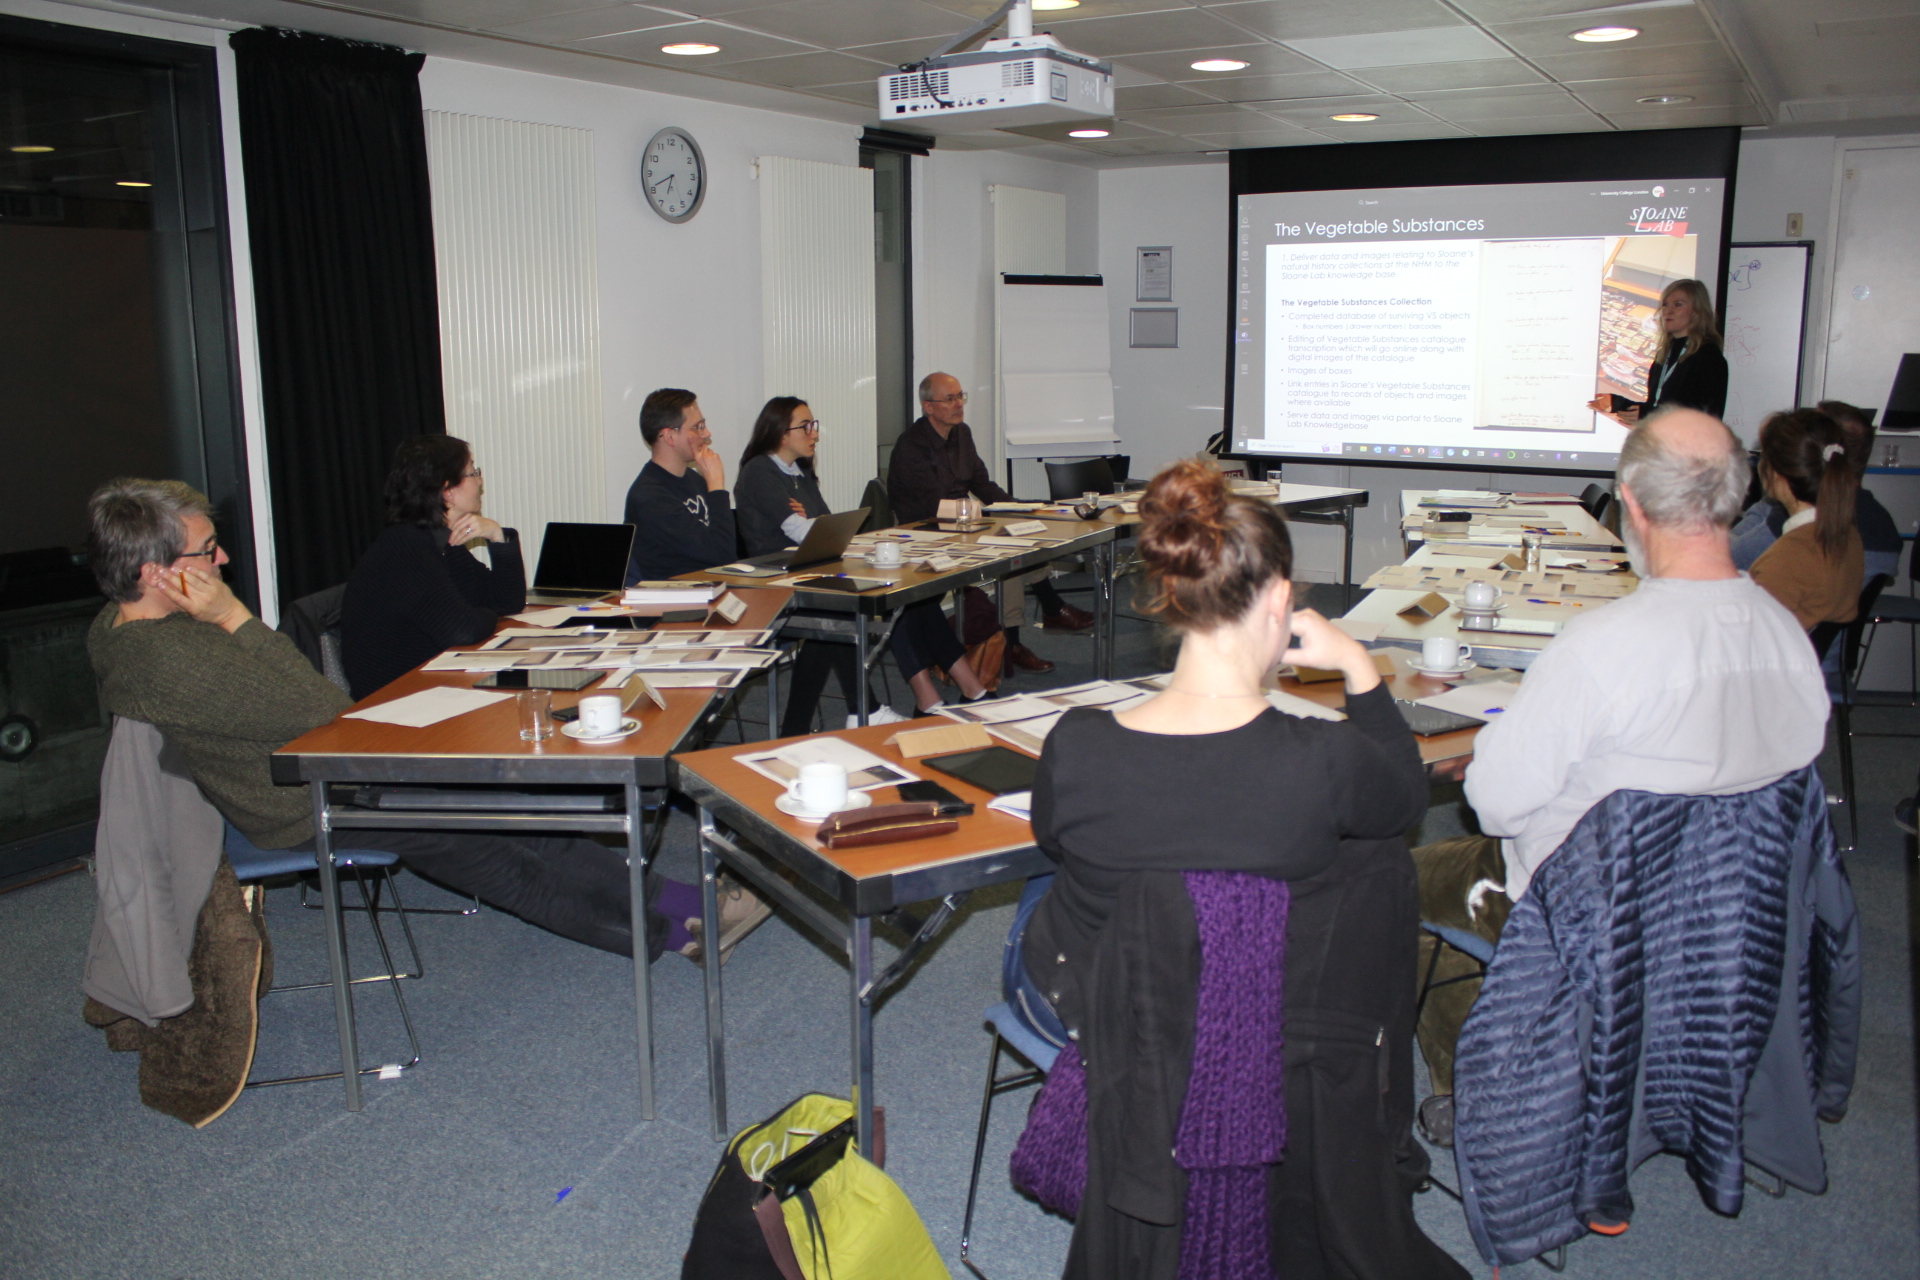 Sloane Lab co-design participants at the UCL workshop